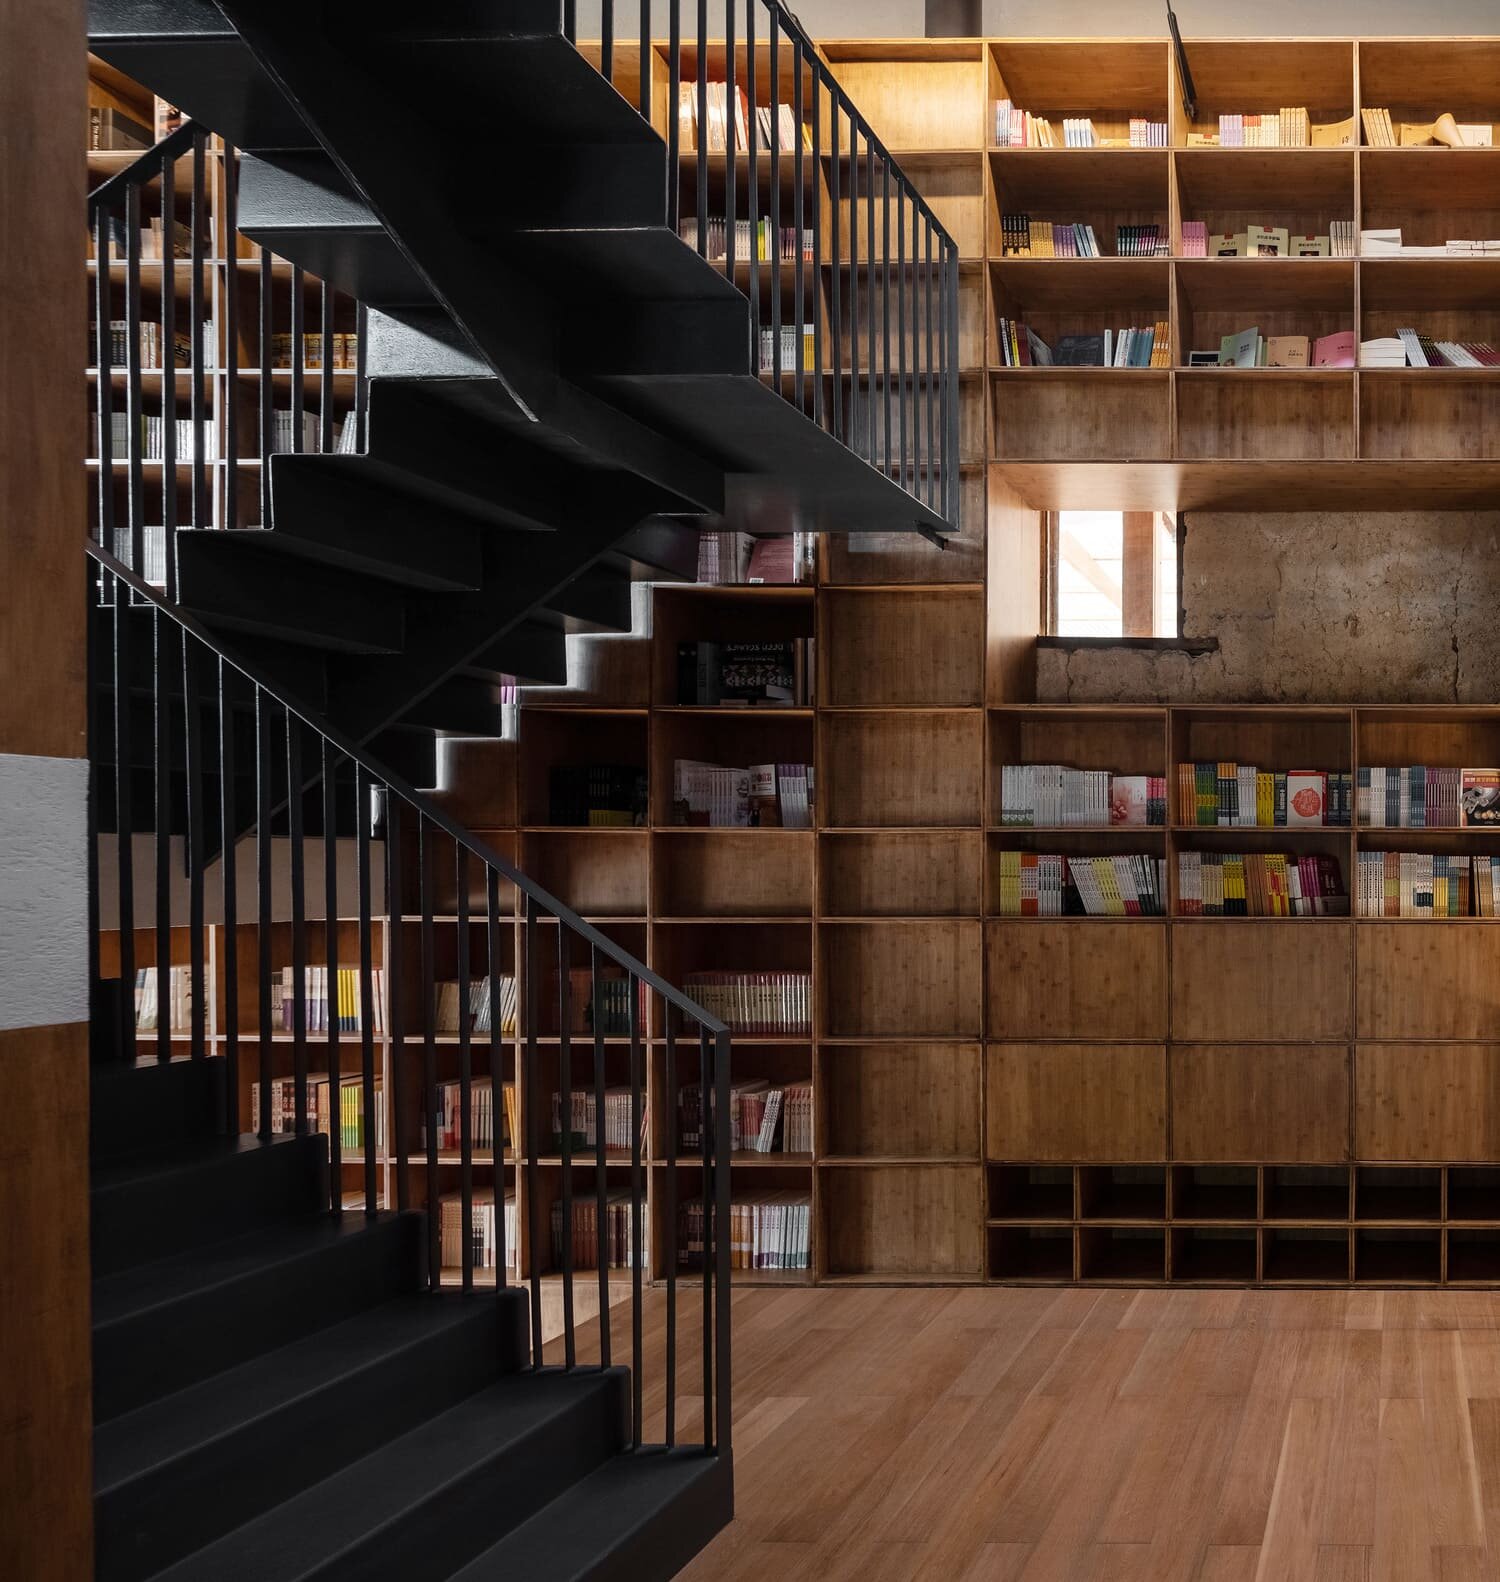 tao+c-Bookstore-Su Sheng Liang-Visual Atelier 8-Architecture-11.jpg